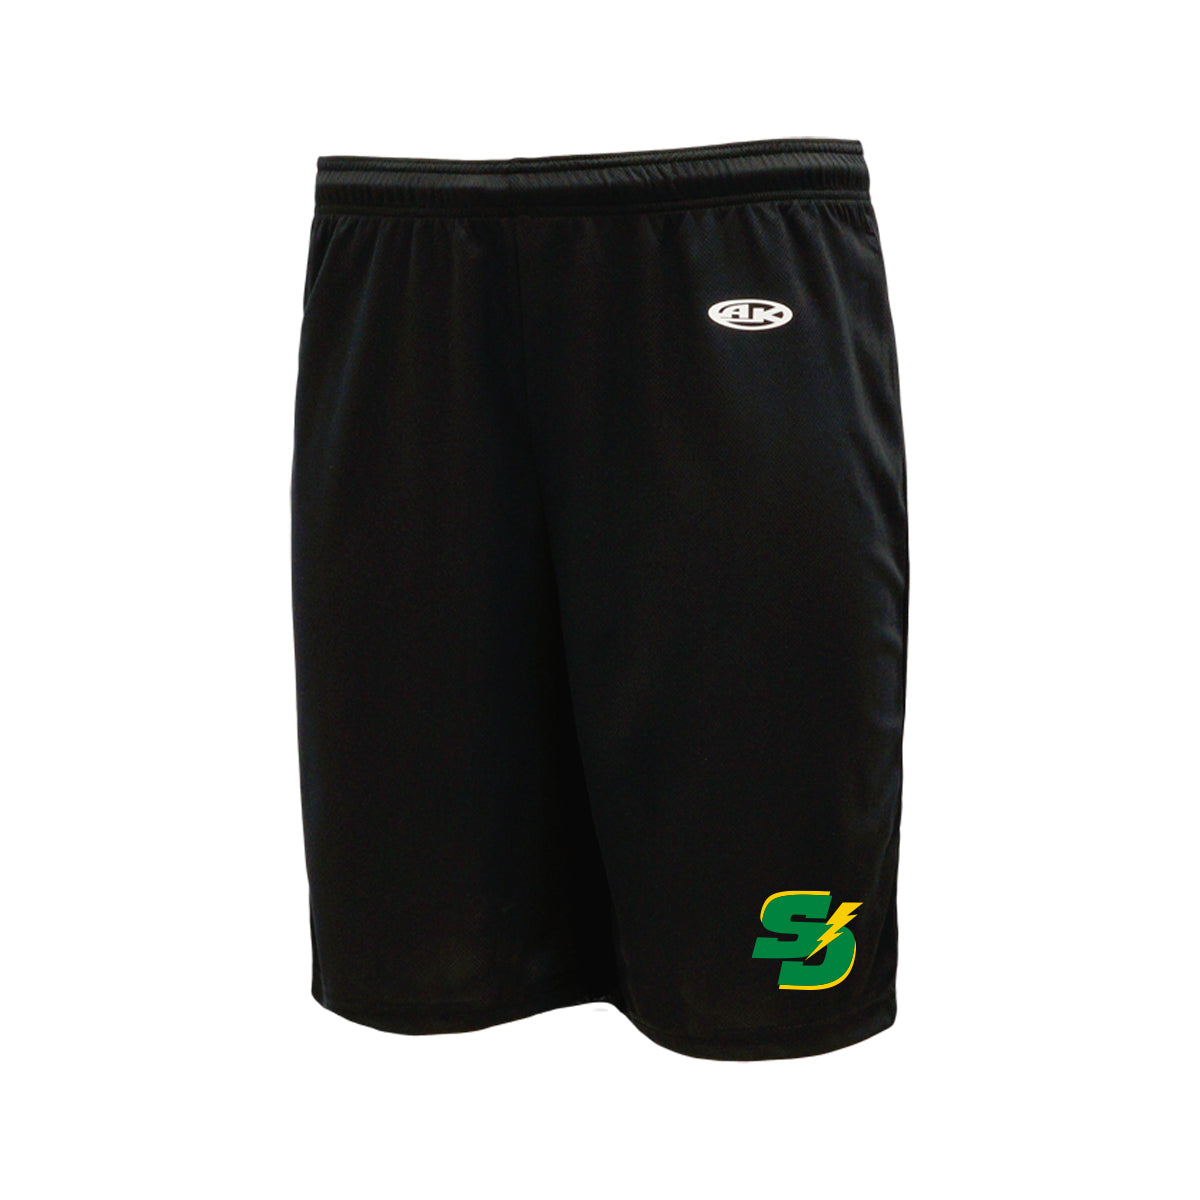 South Delta -- Senior Pocketed Shorts